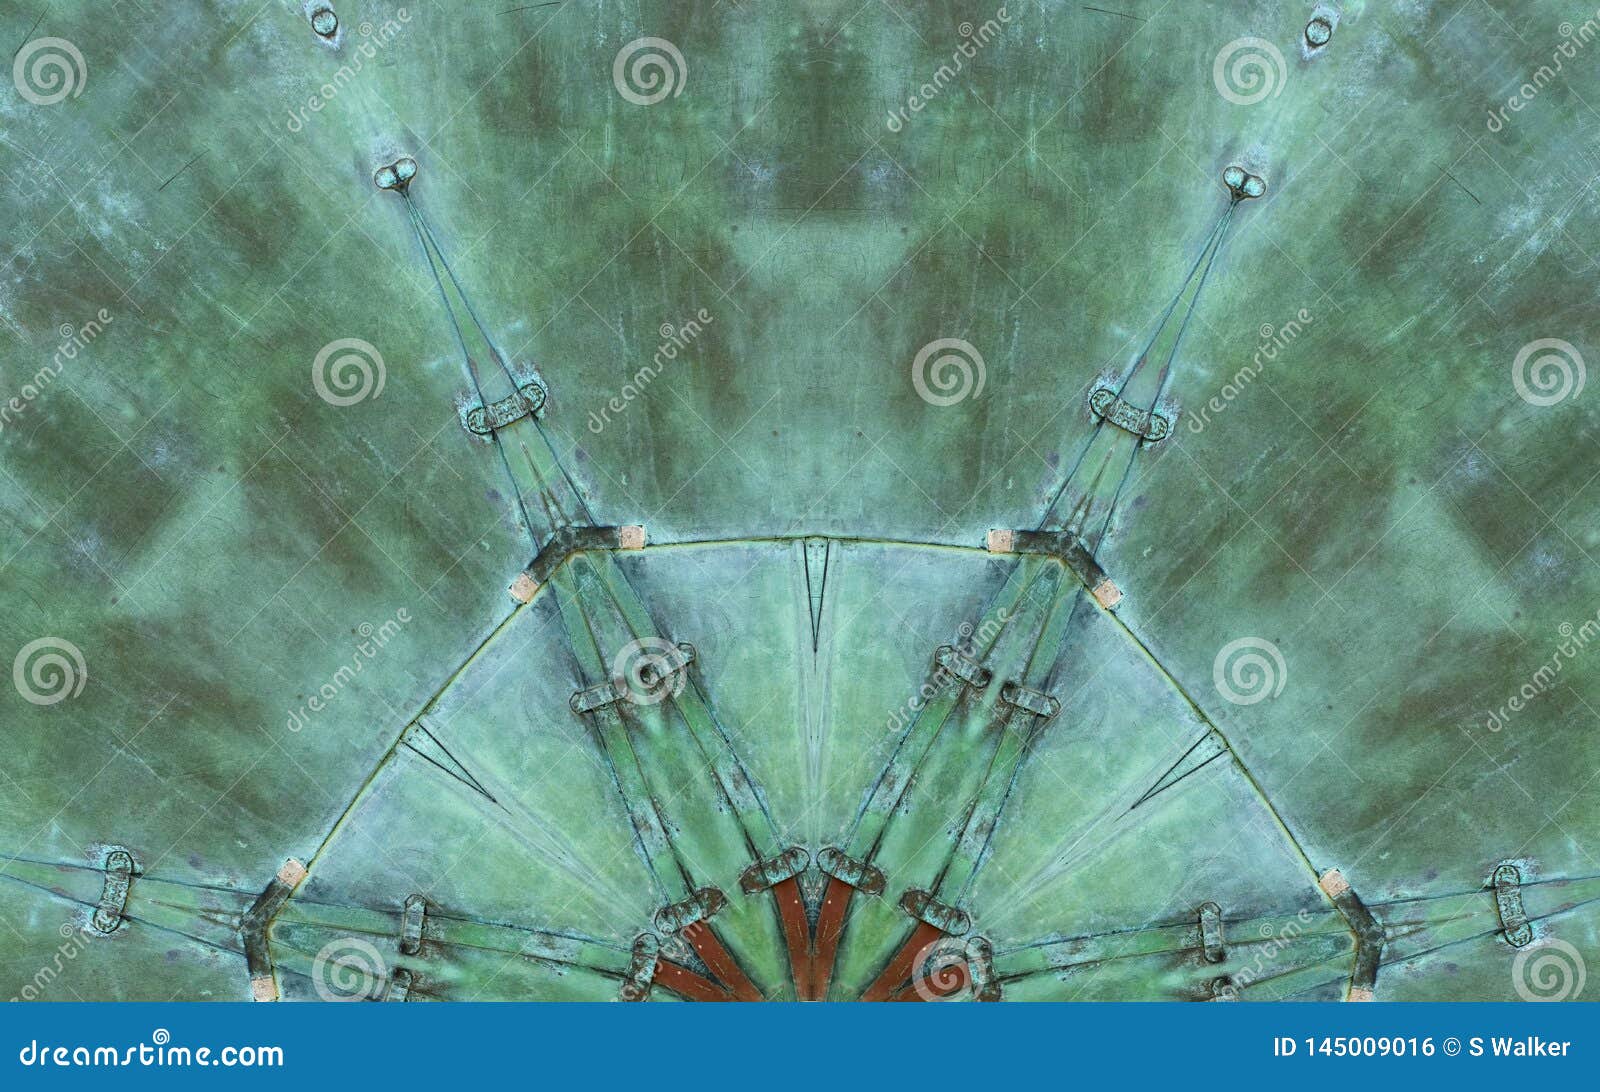 verdigris copper background, mirrored image.